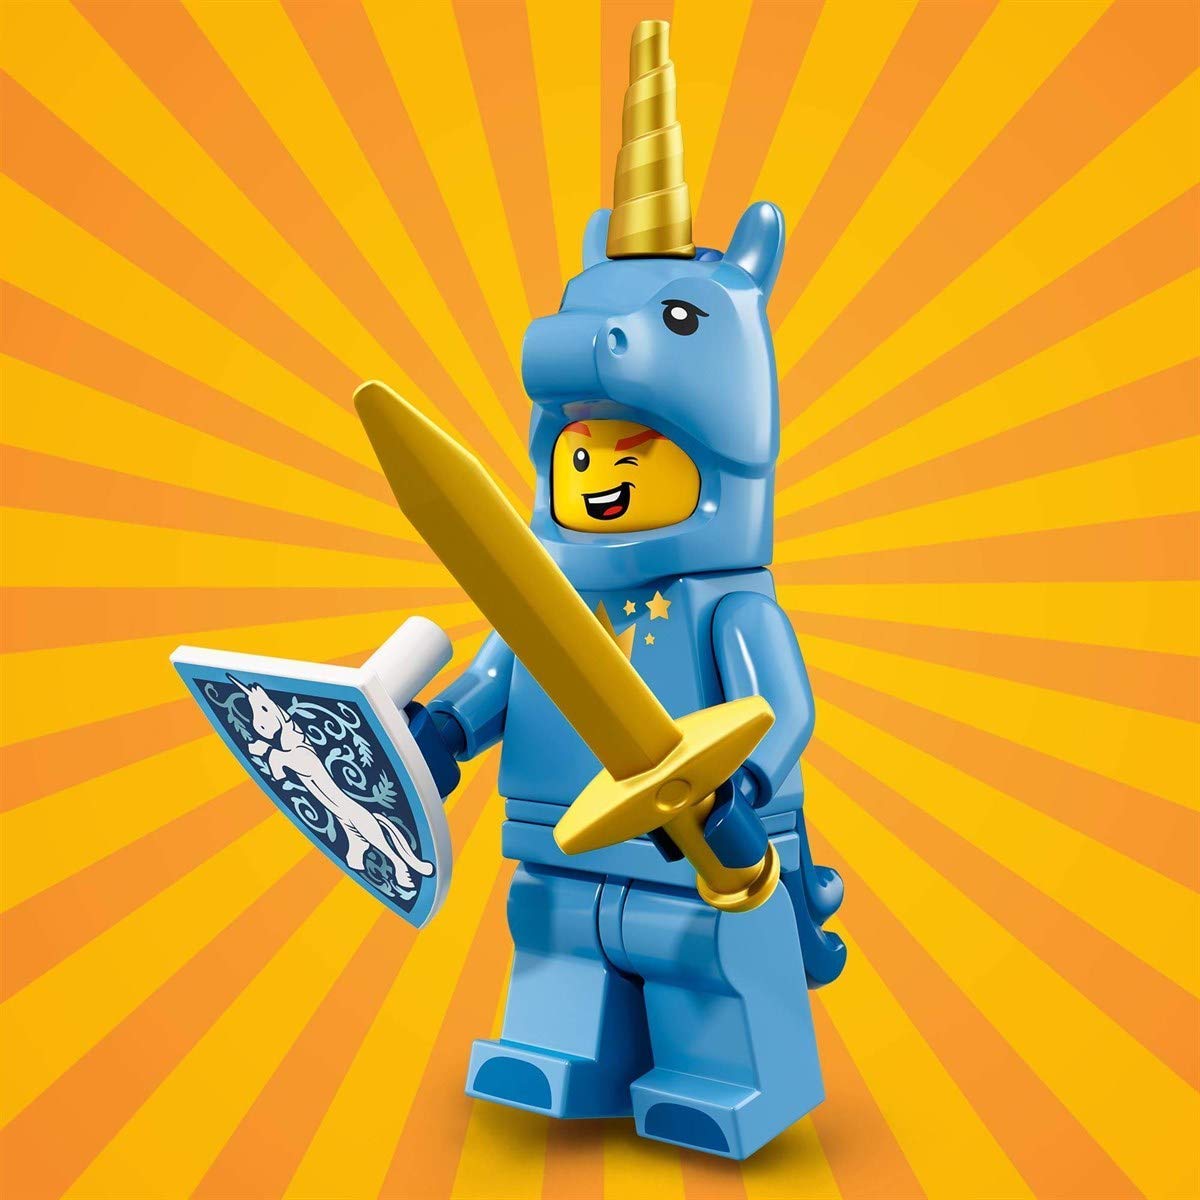 Lego 71021 Series 18 # 17 Unicorn Knight Minif Igure